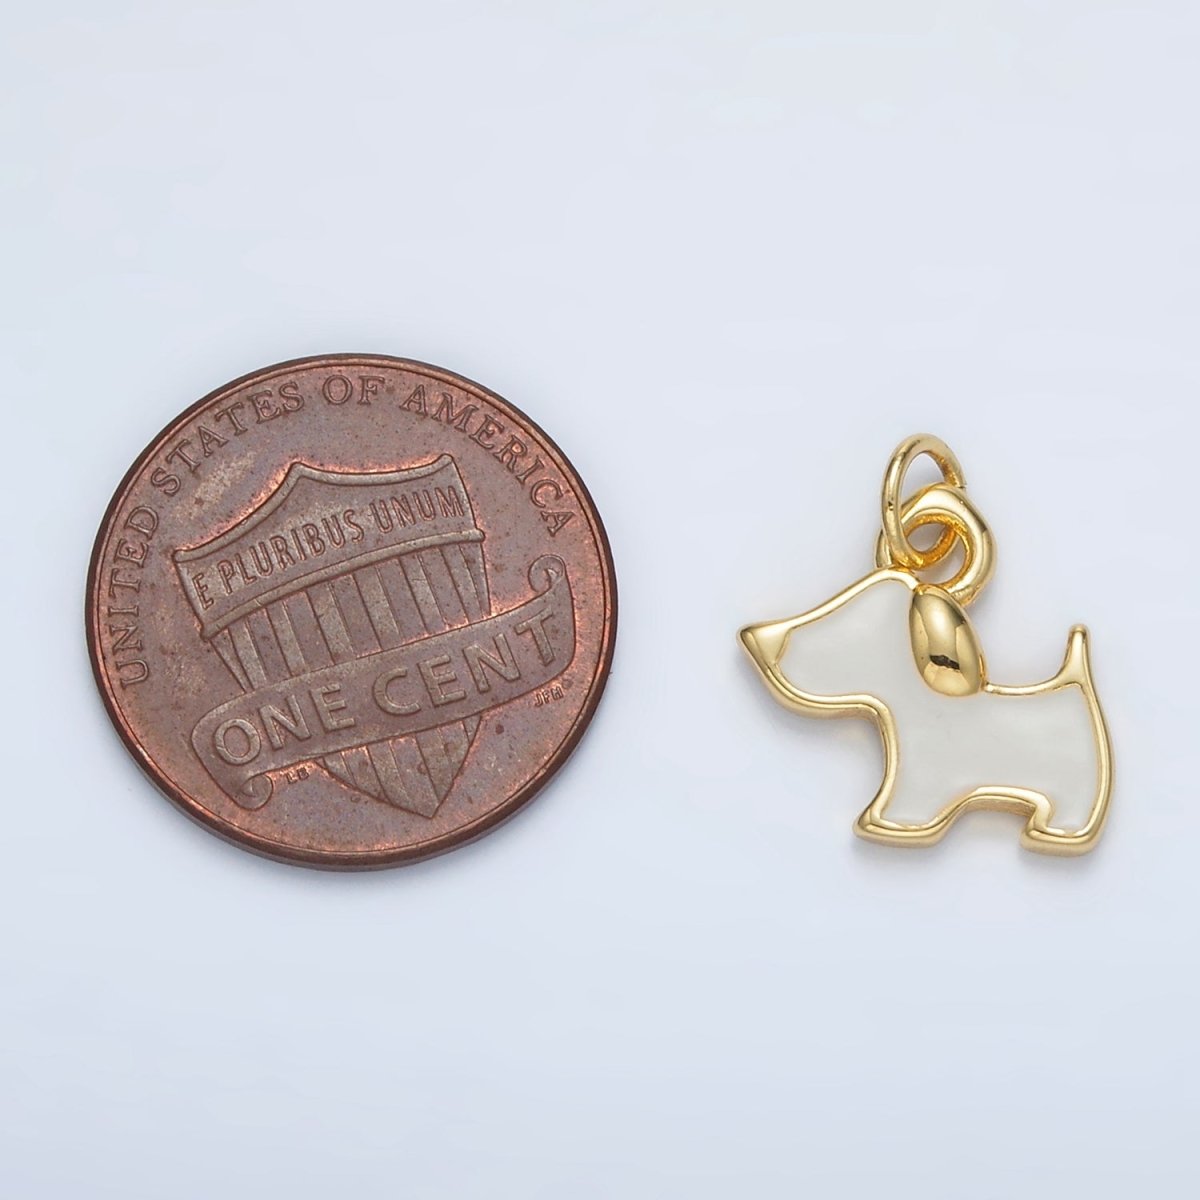 24K Gold Filled White Enamel Dog Animal Mini Charm | AC099 - DLUXCA